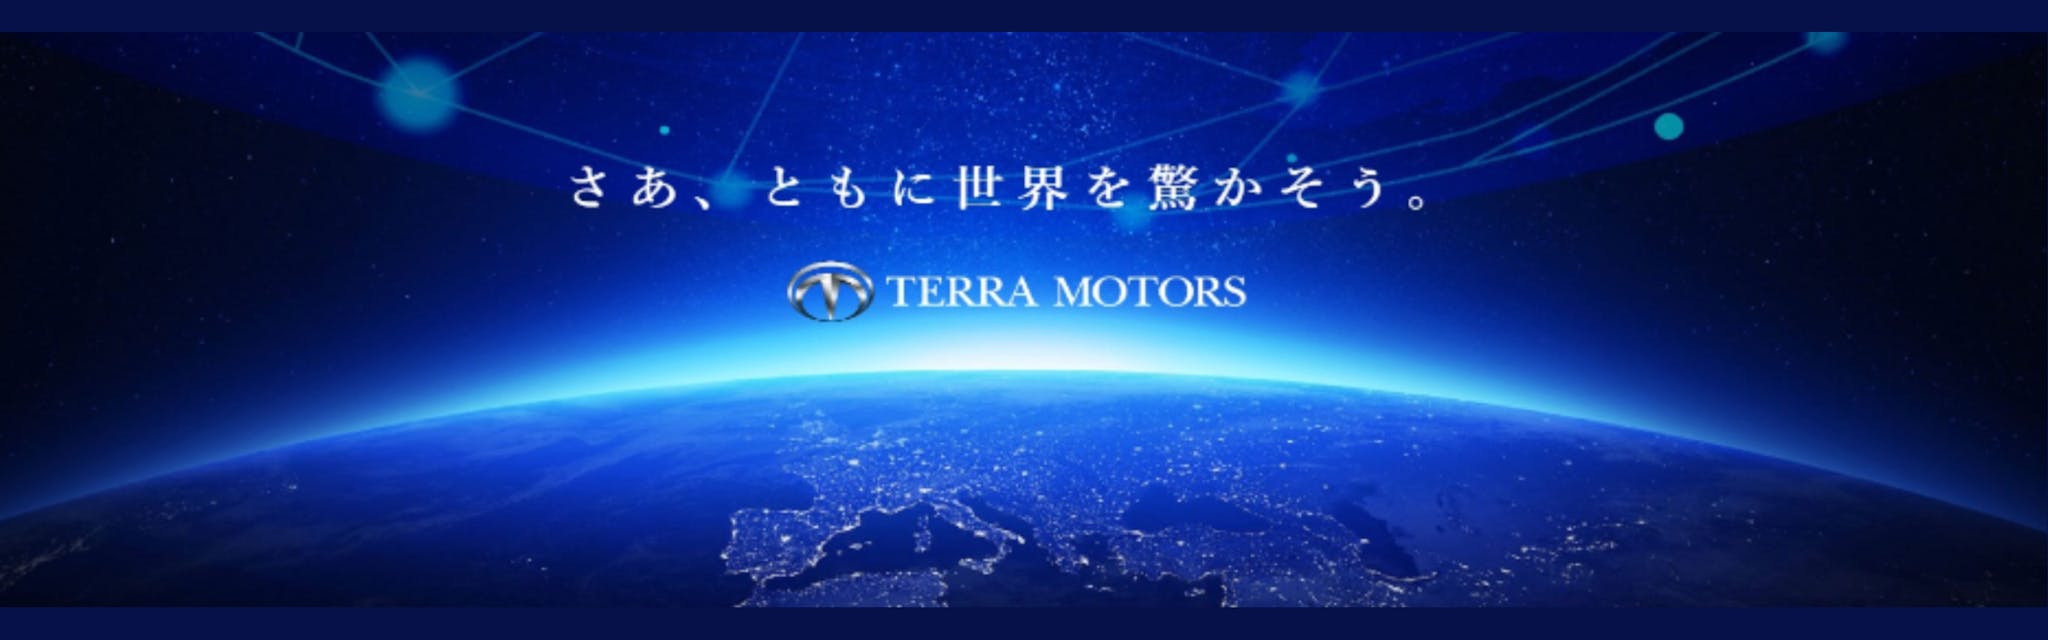 Terra Motors株式会社 - カバー画像